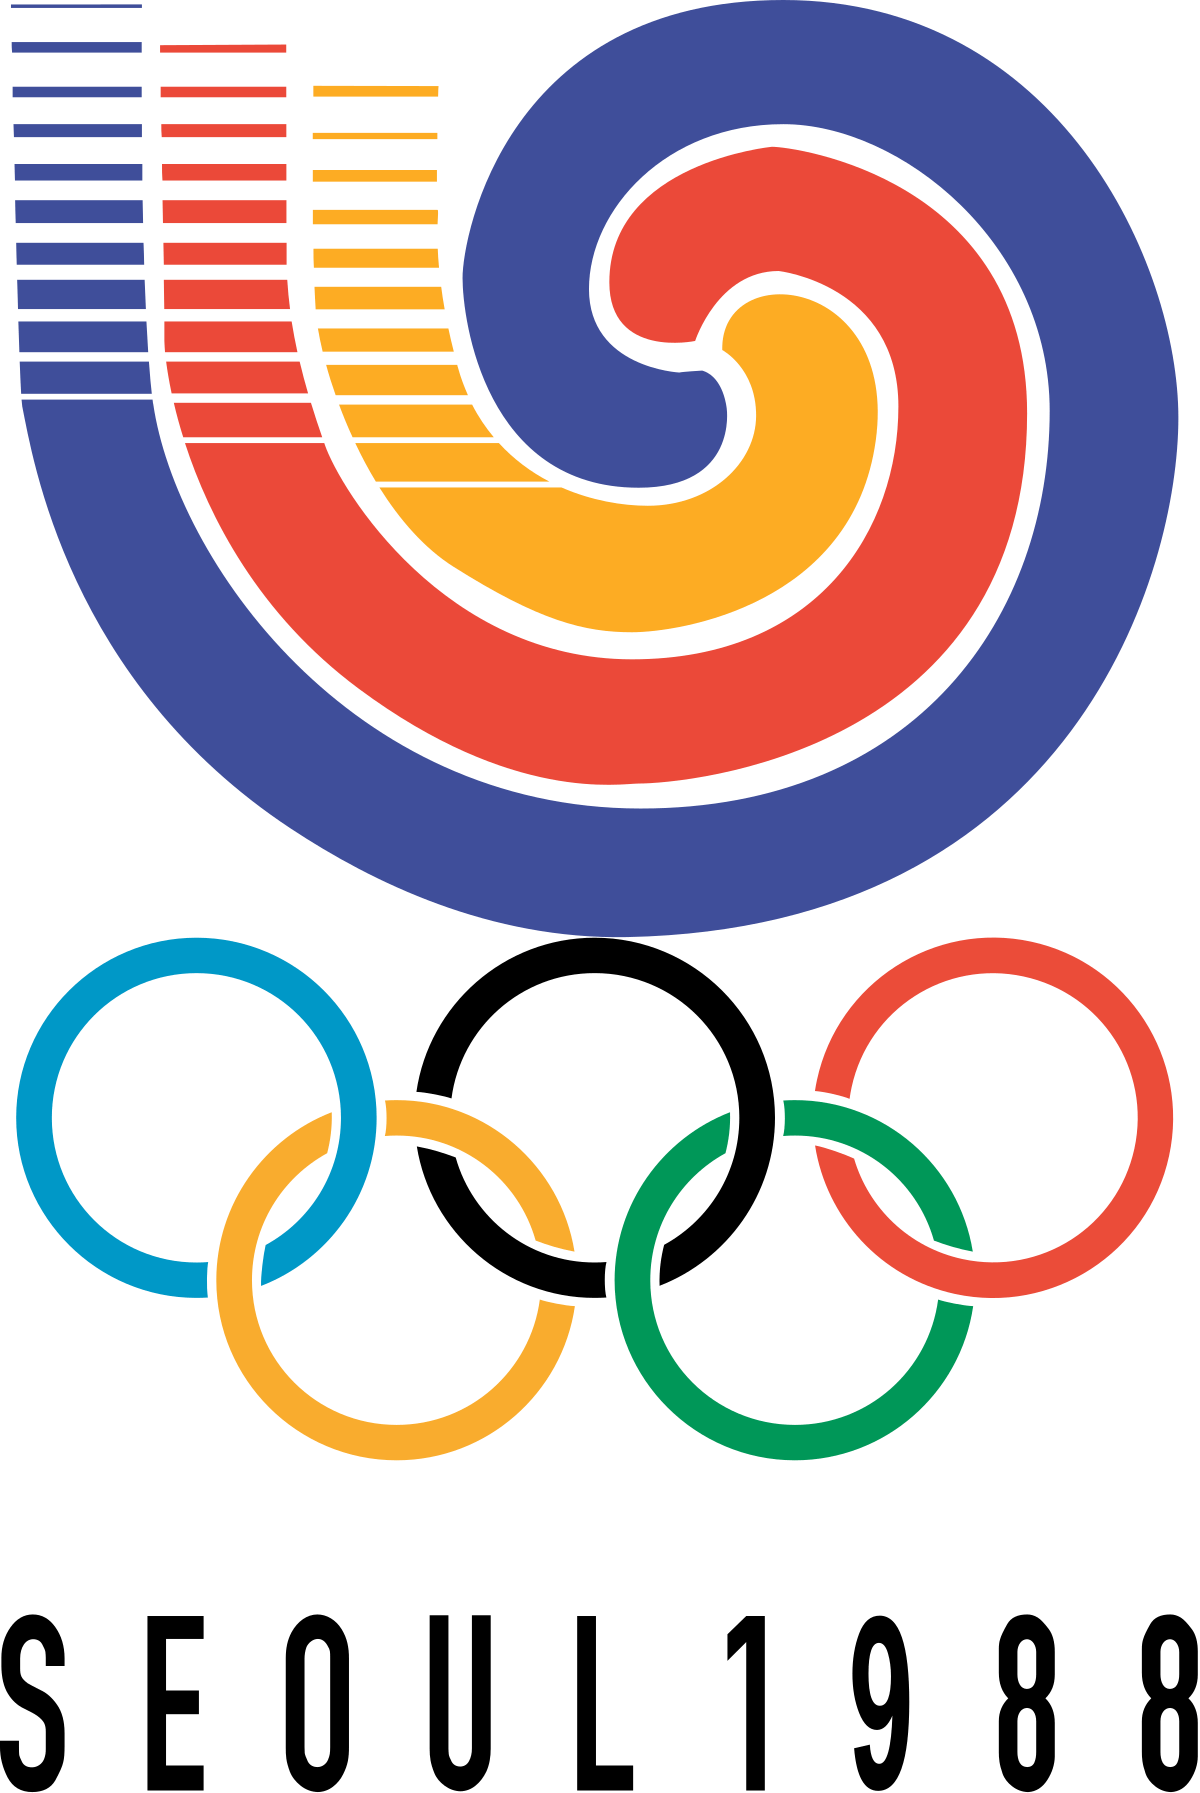 88 Logo - Summer Olympics